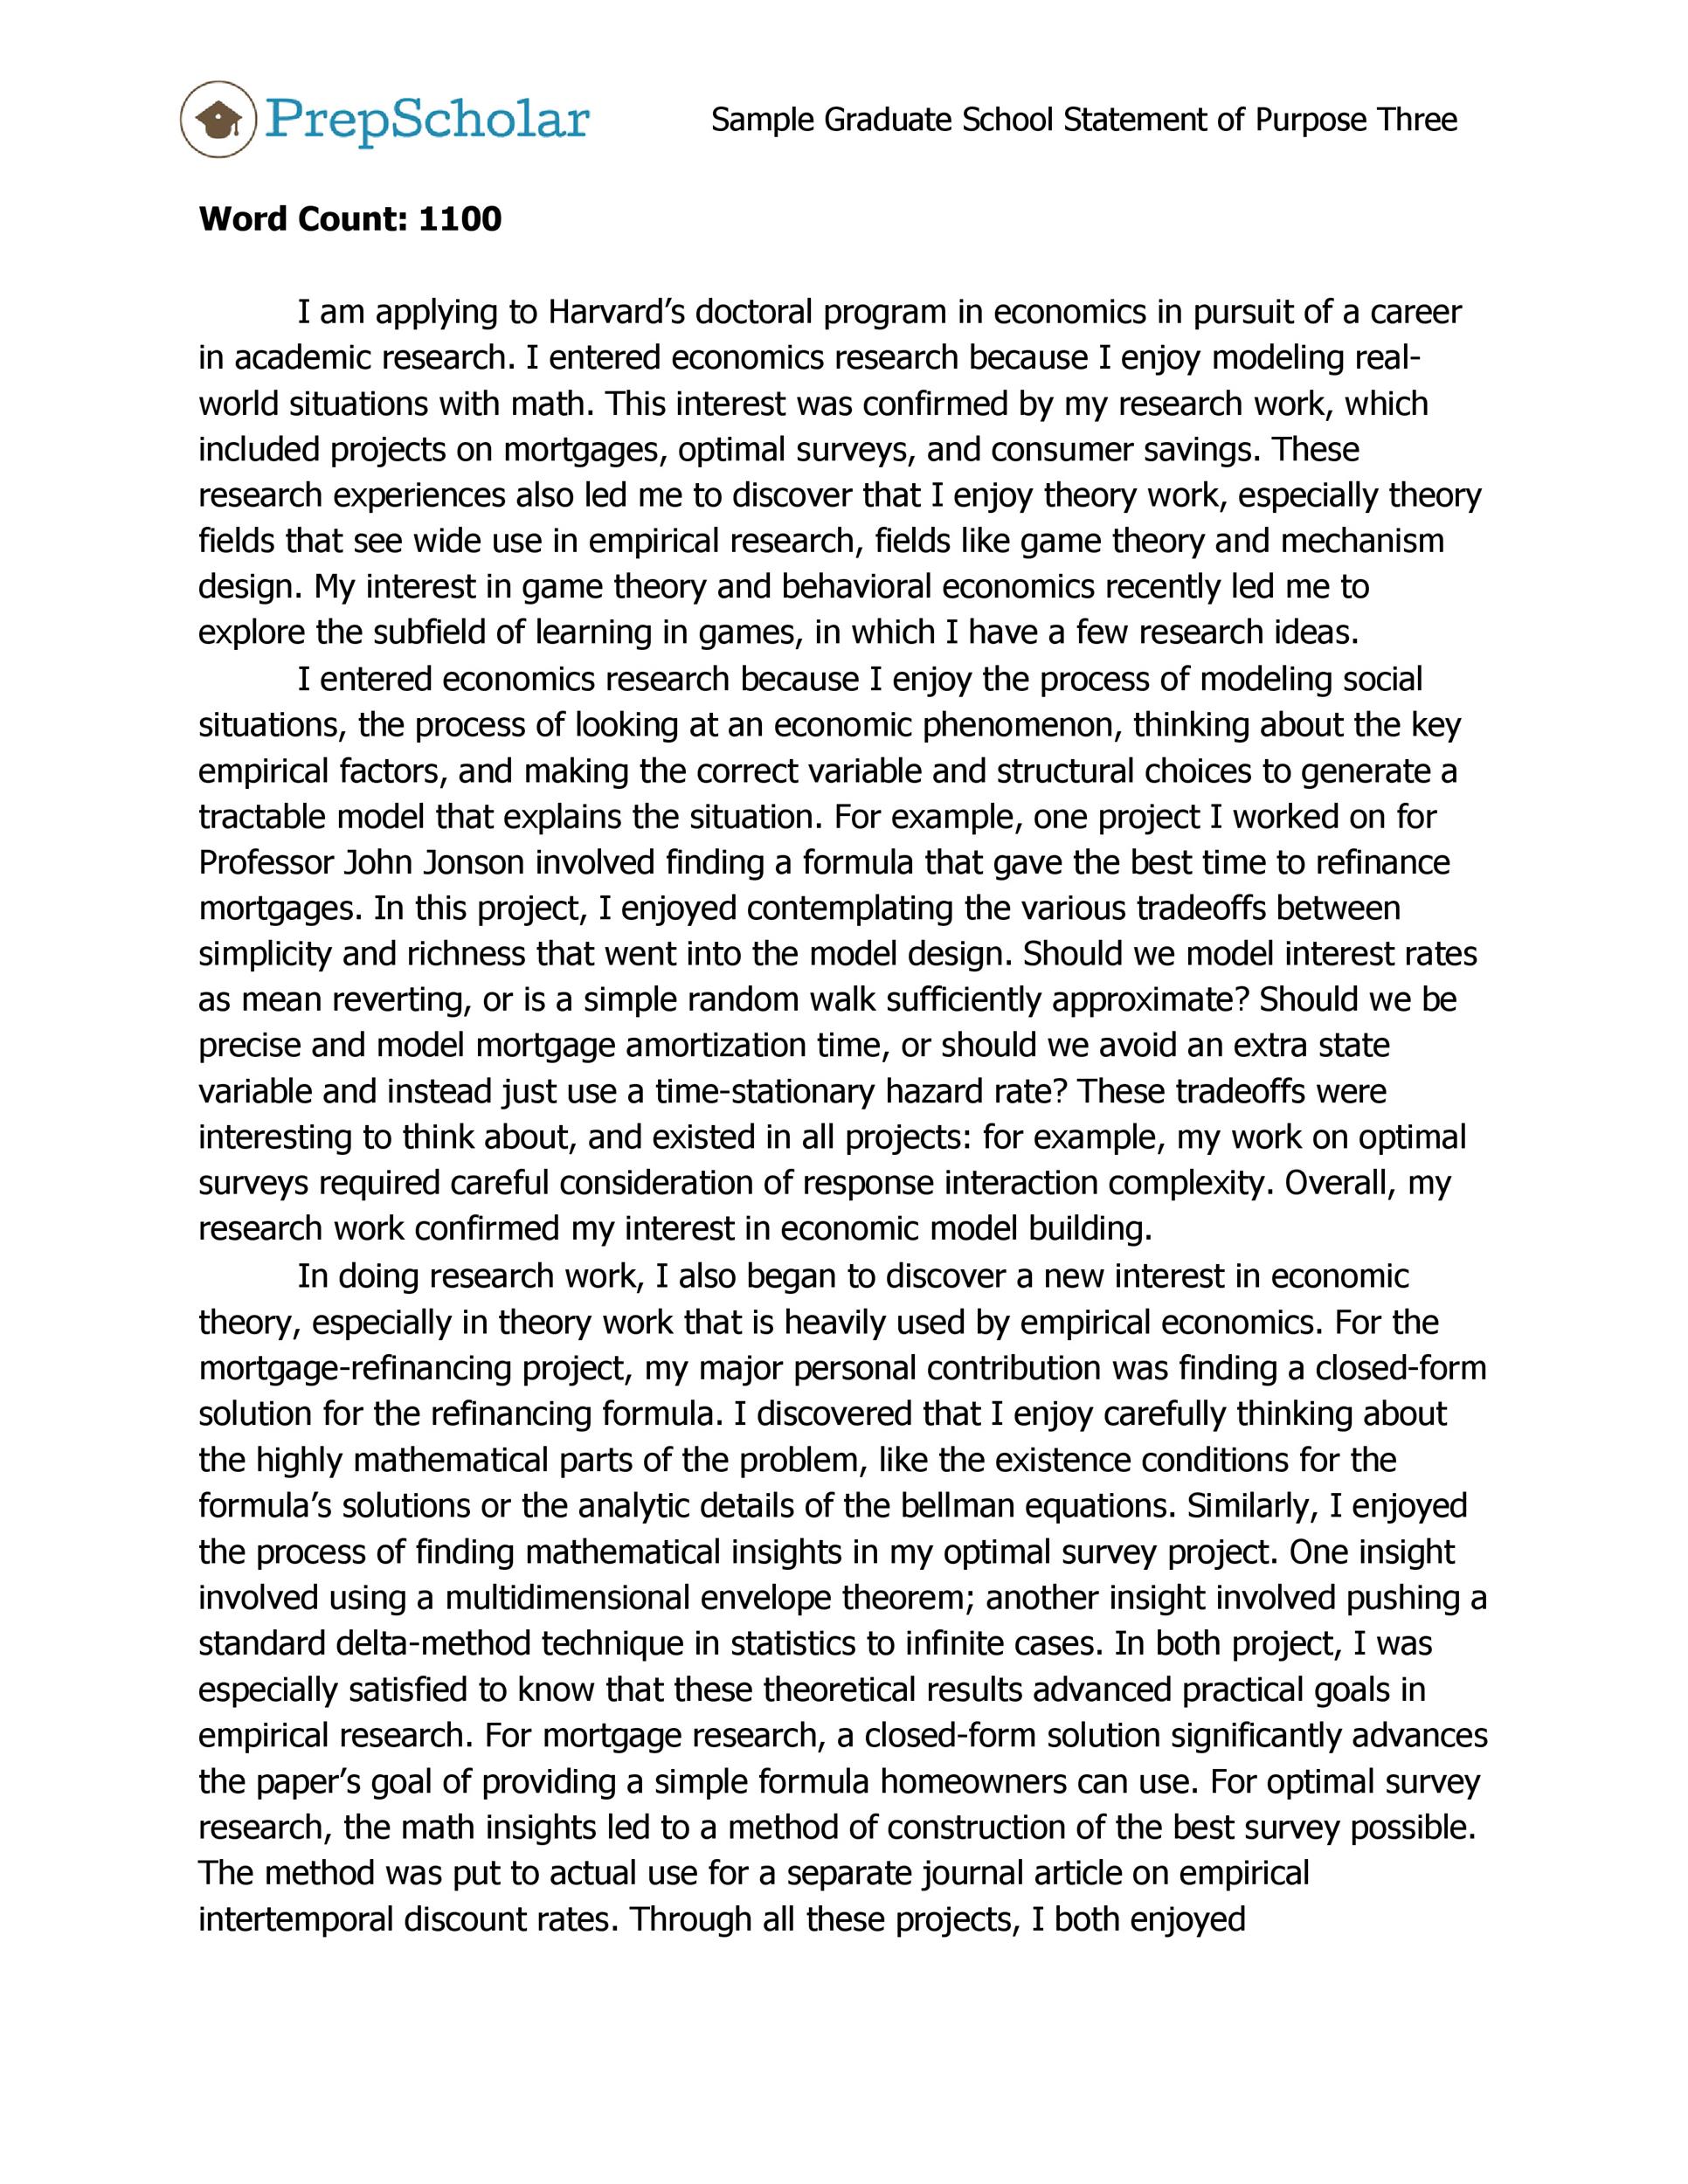 statement of purpose essay format